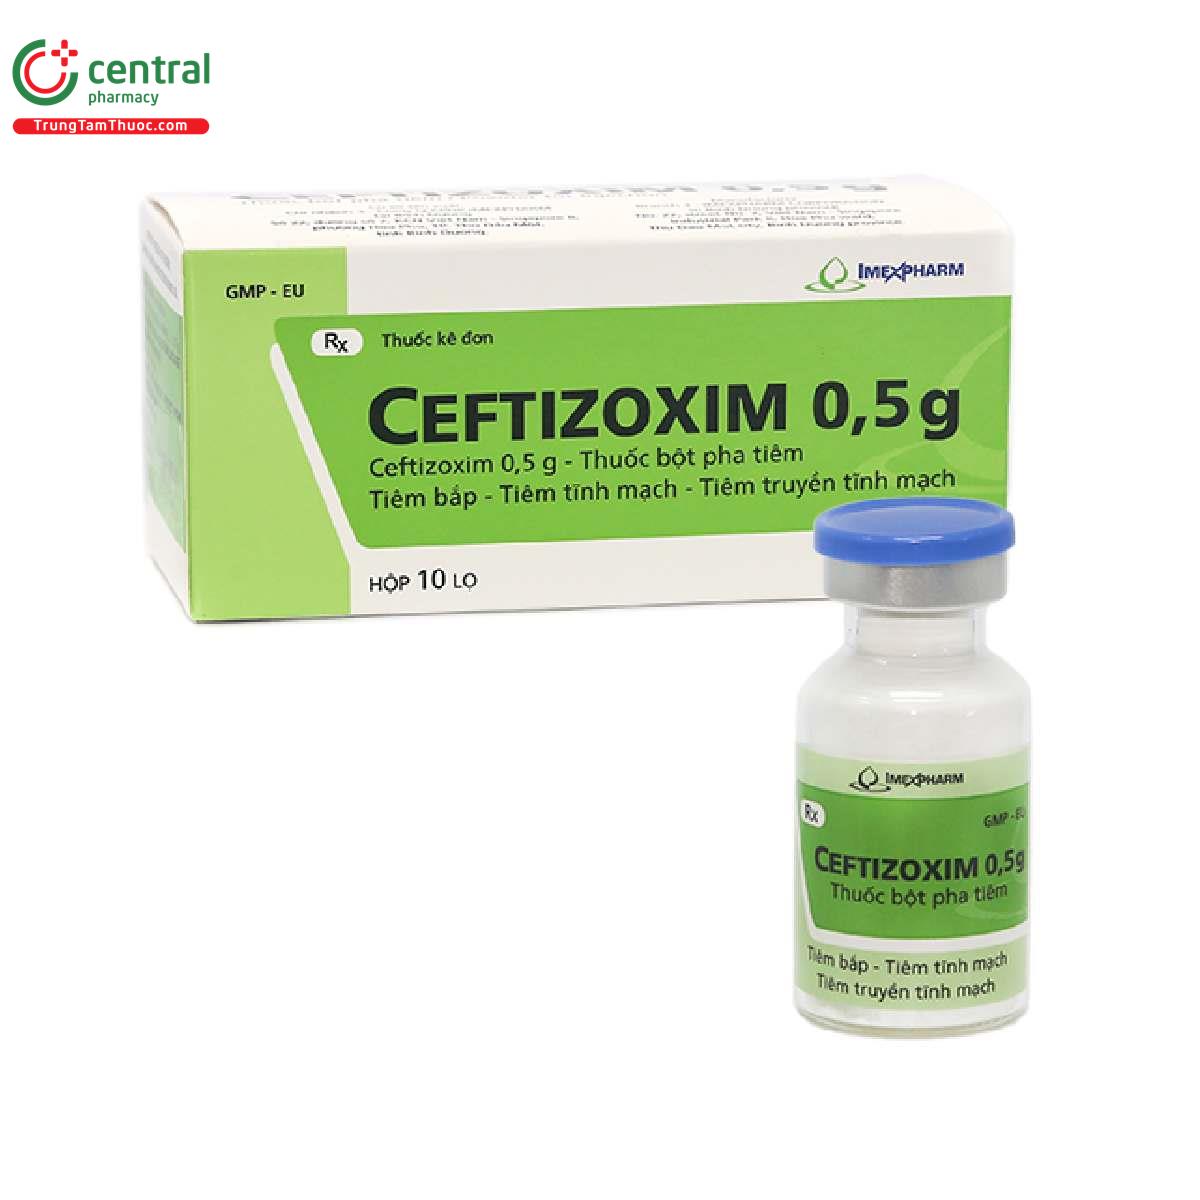 ceftizoxim 05g imexpharm 1 S7414